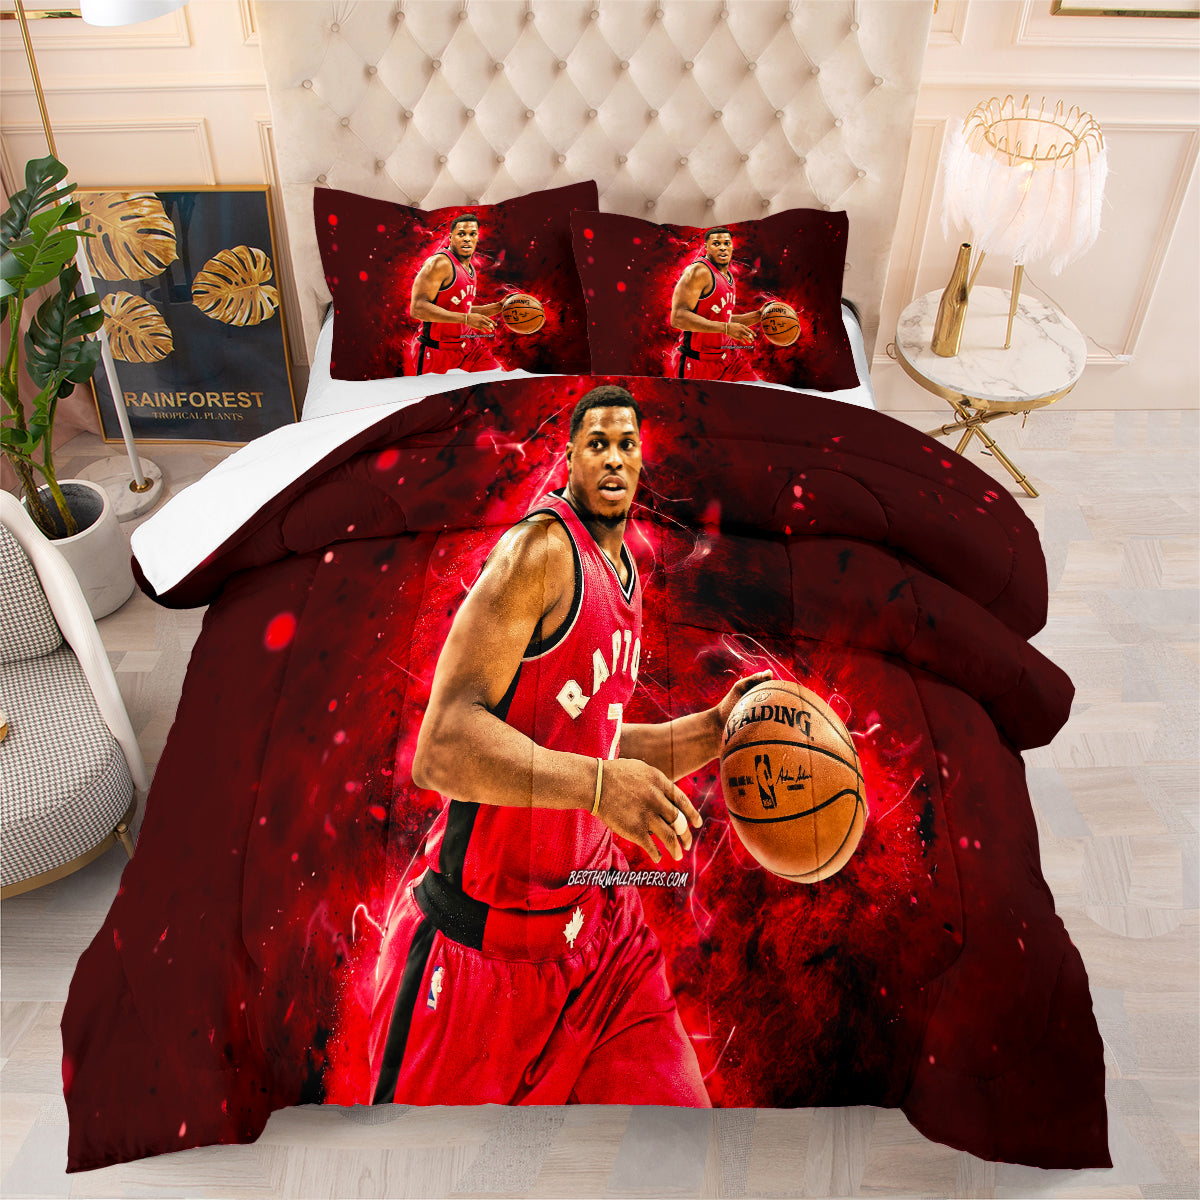 Toronto Basketball Raptors Comforter Pillowcases 3PC Sets Blanket All Season Reversible Quilted Duvet